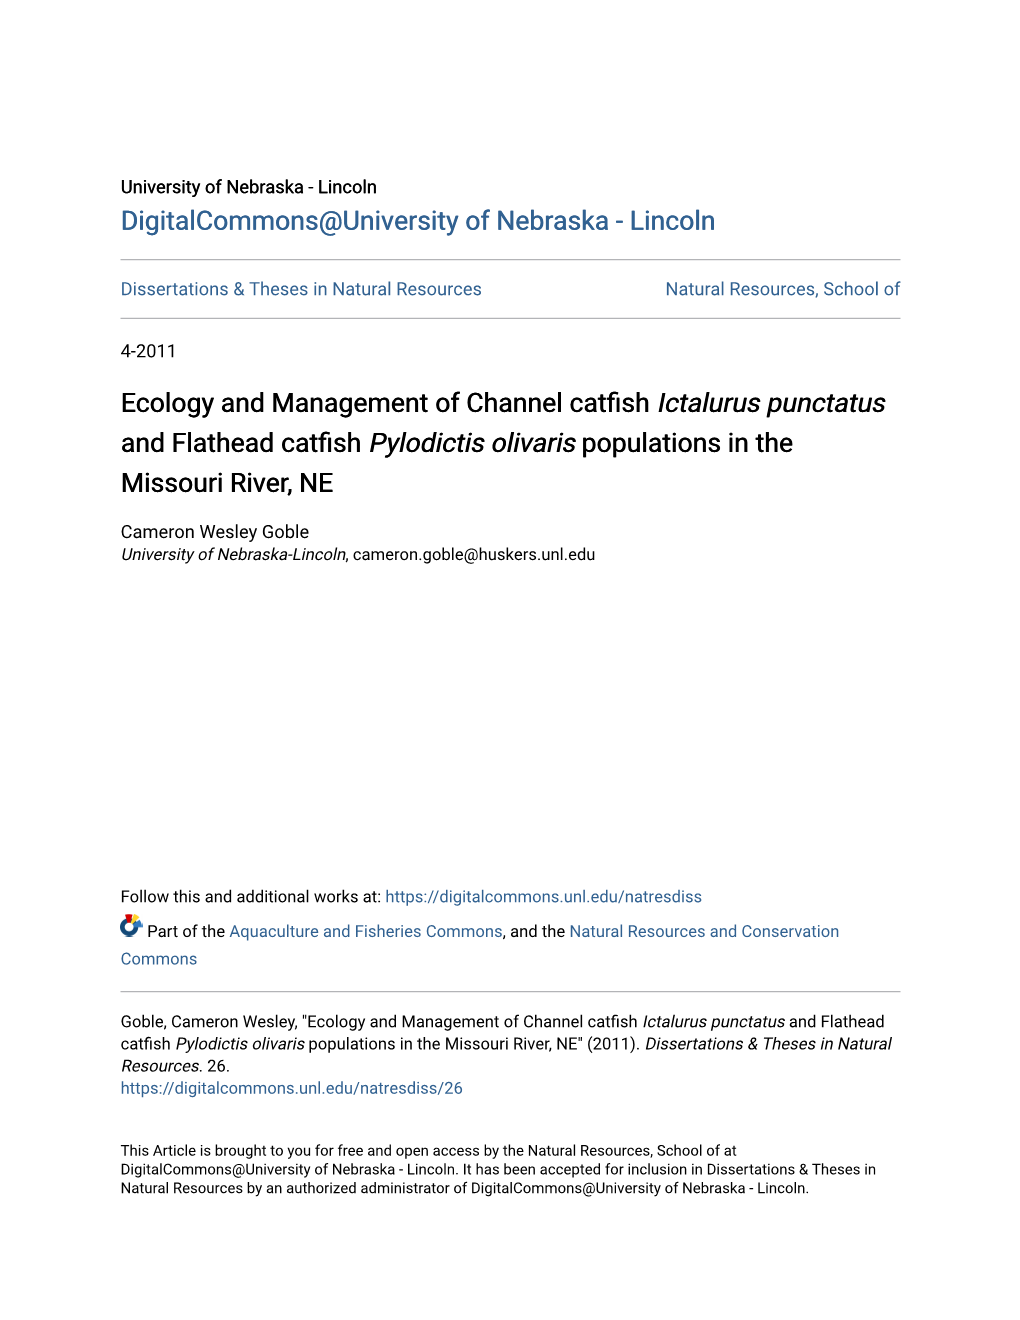 Ecology and Management of Channel Catfish &lt;I&gt;Ictalurus Punctatus&lt;/I&gt;